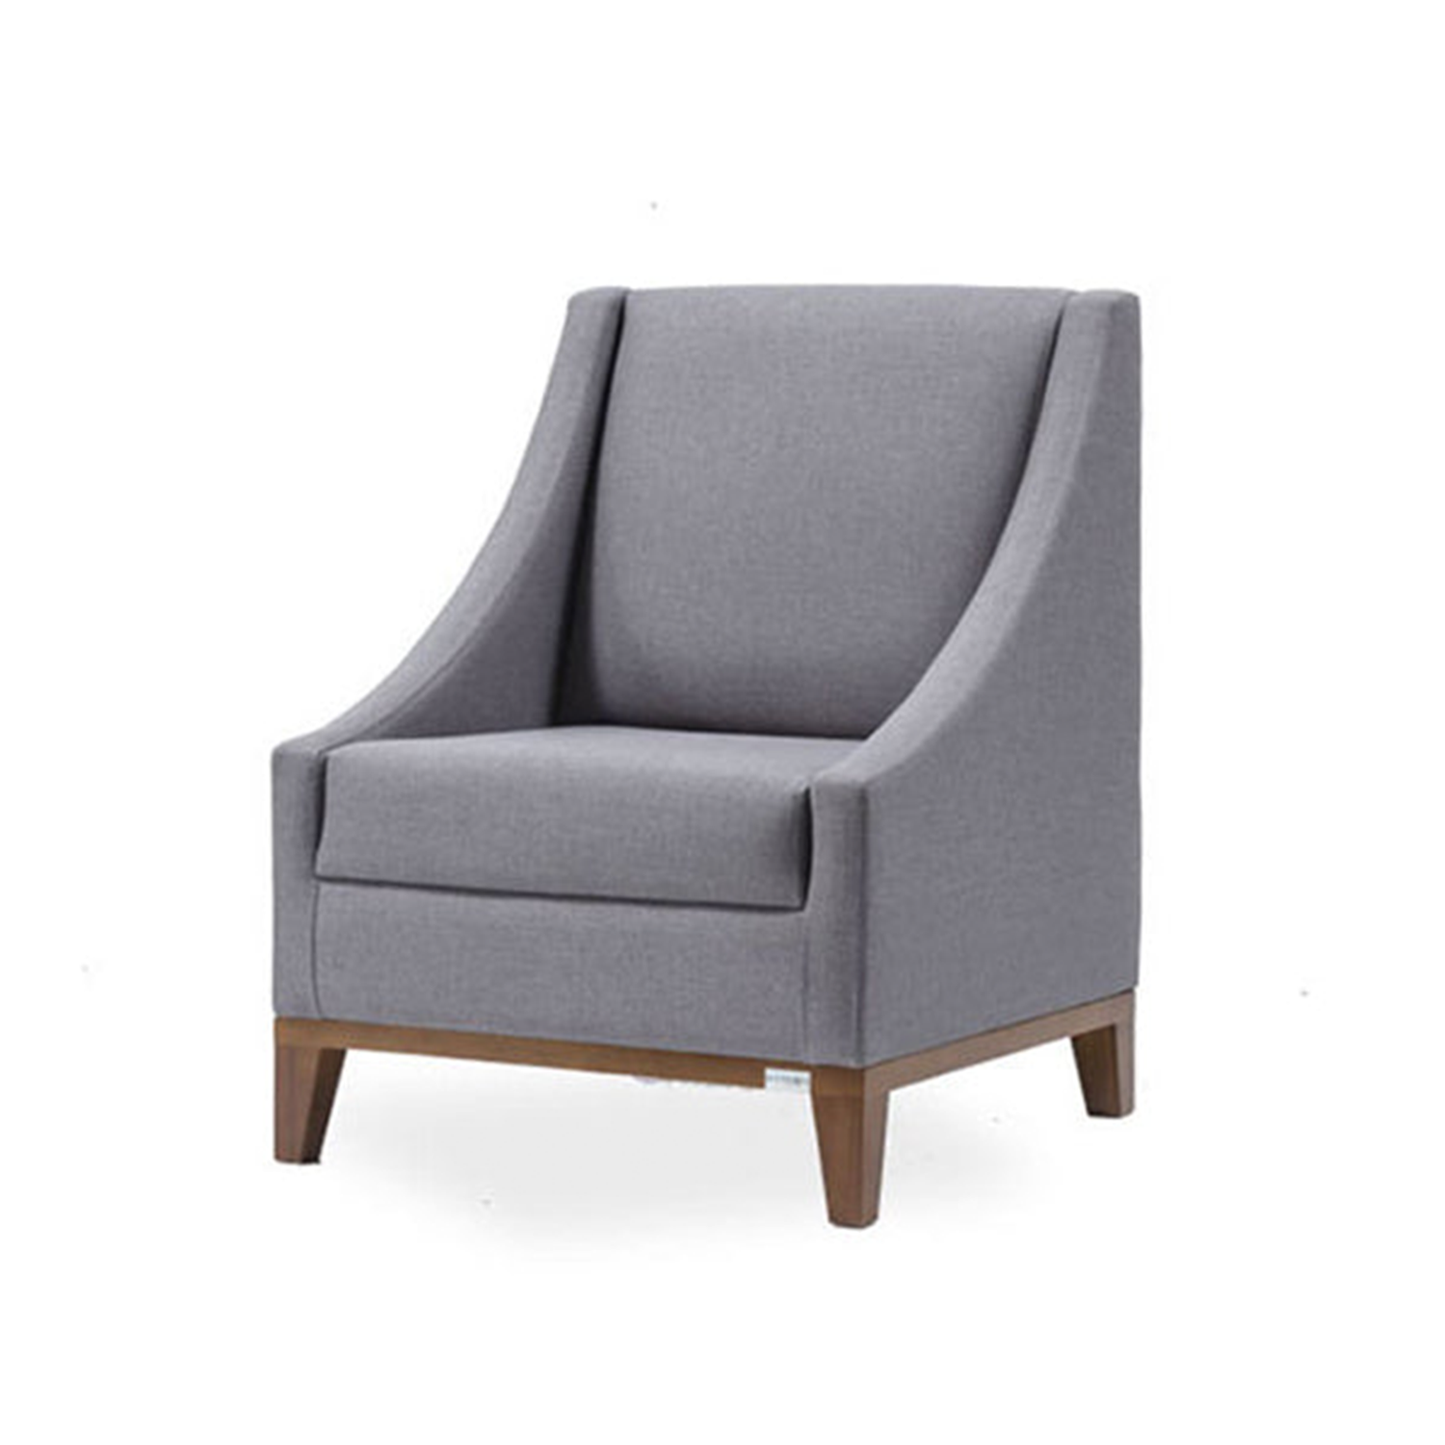 Fox Lounge Chair